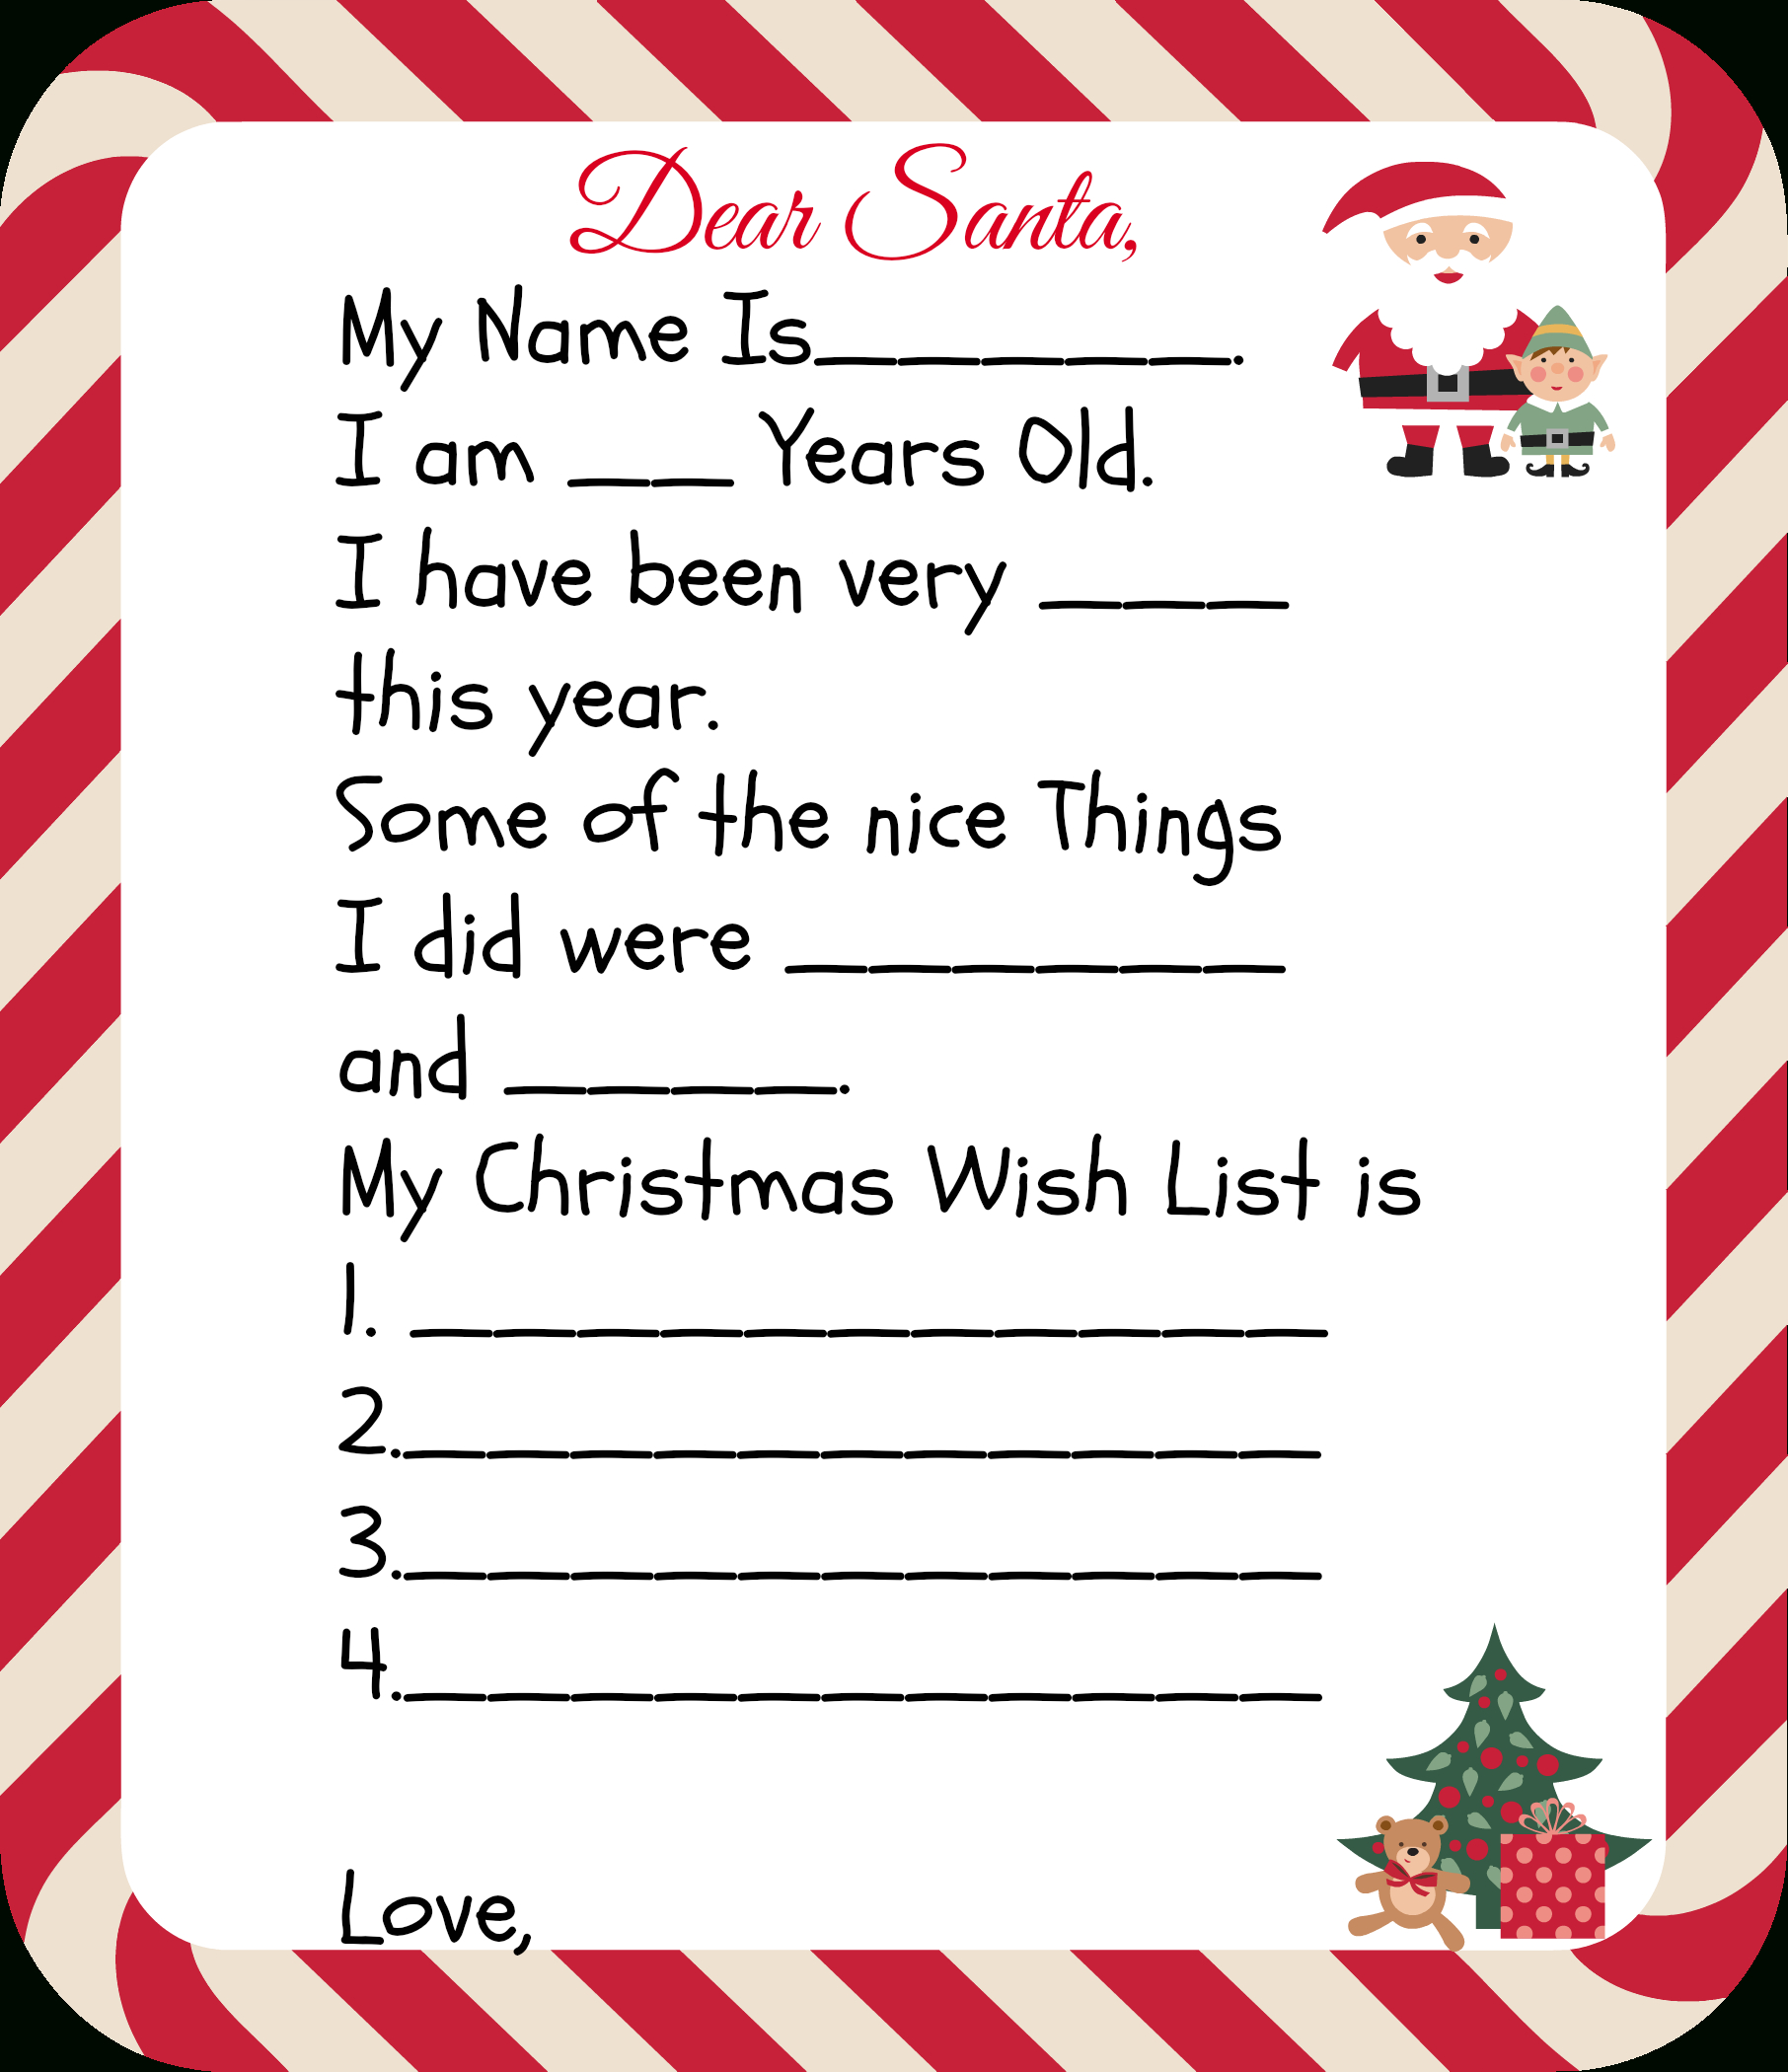 Free Printable Santa Letters For Kids | Holiday Ideas: Christmas - Free Printable Dear Santa Stationary